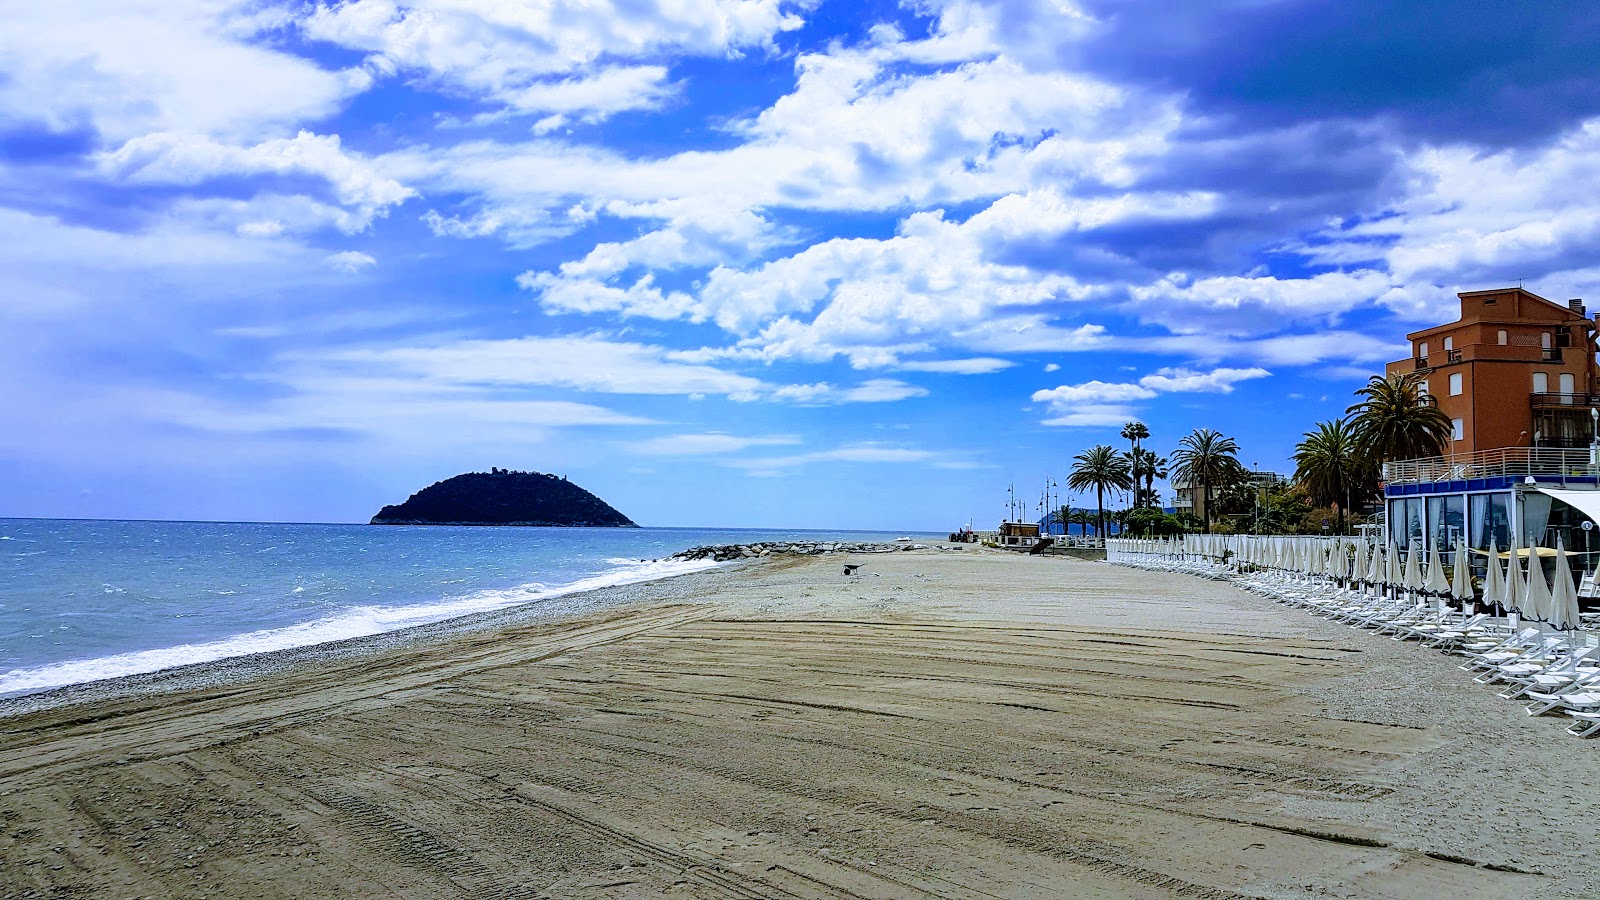 Photo of Doria beach with spacious shore